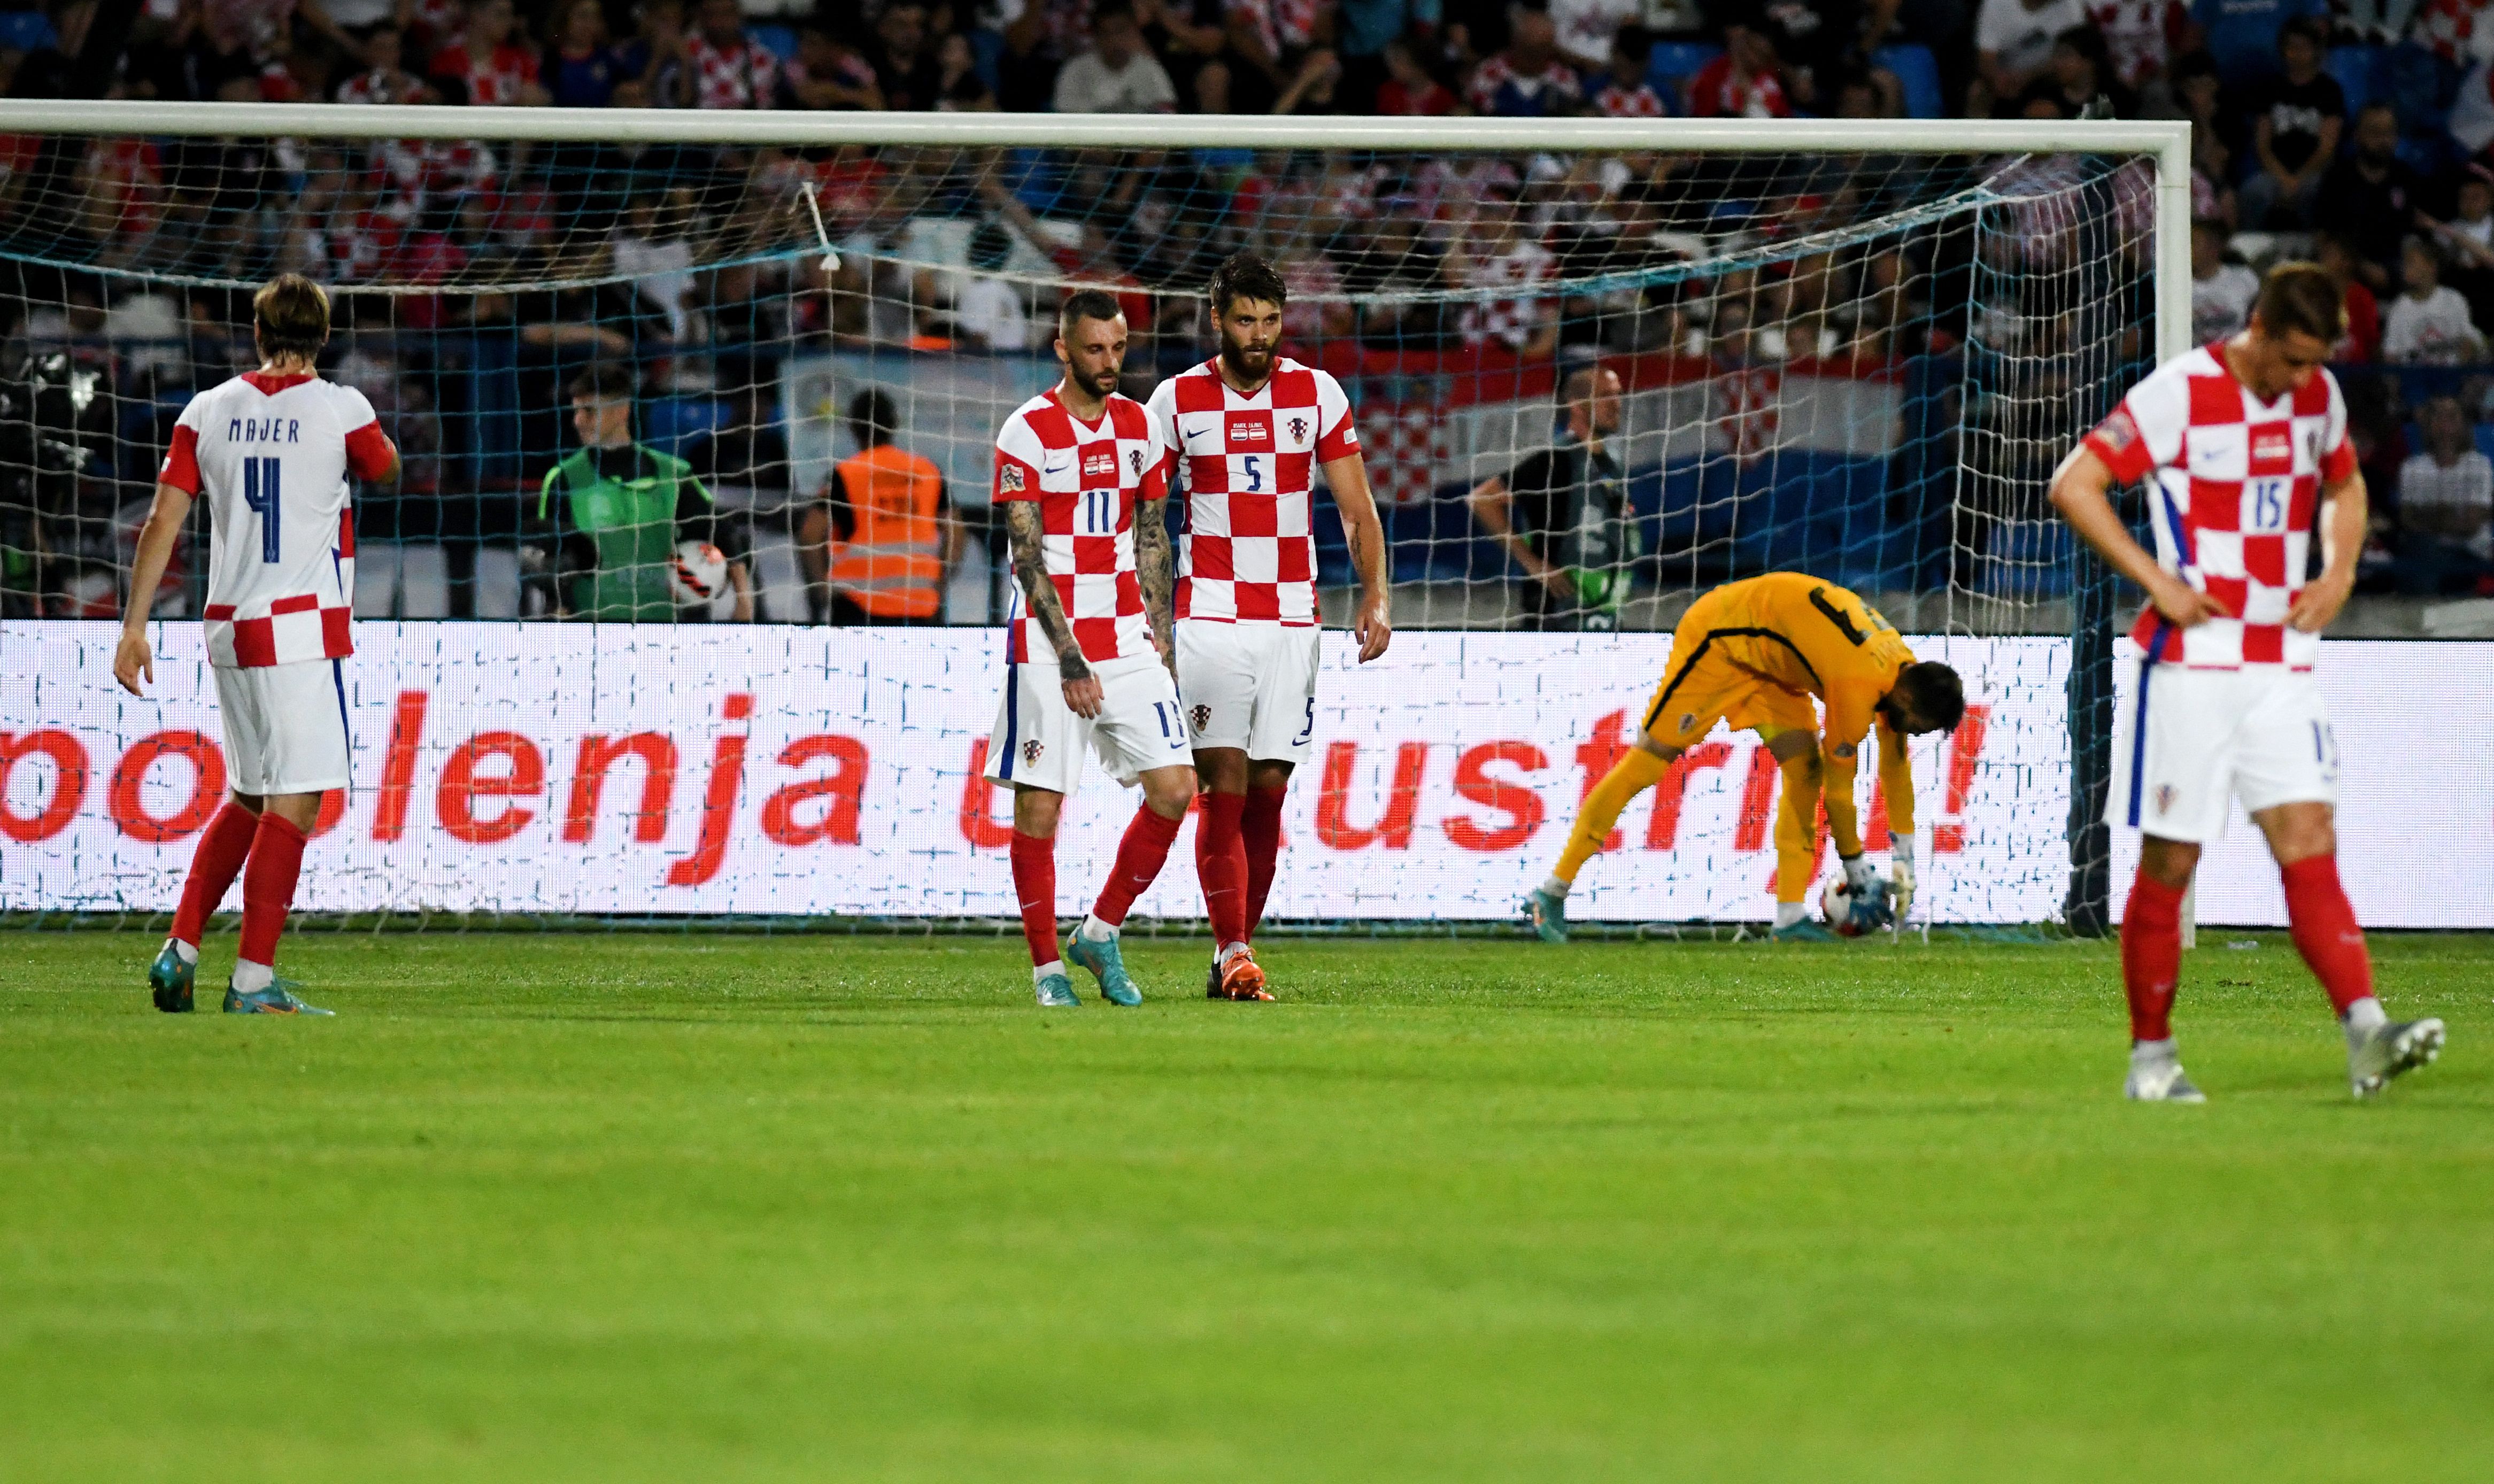 Croatias players react after conceding against Austria at the Gradski stadium in Osijek